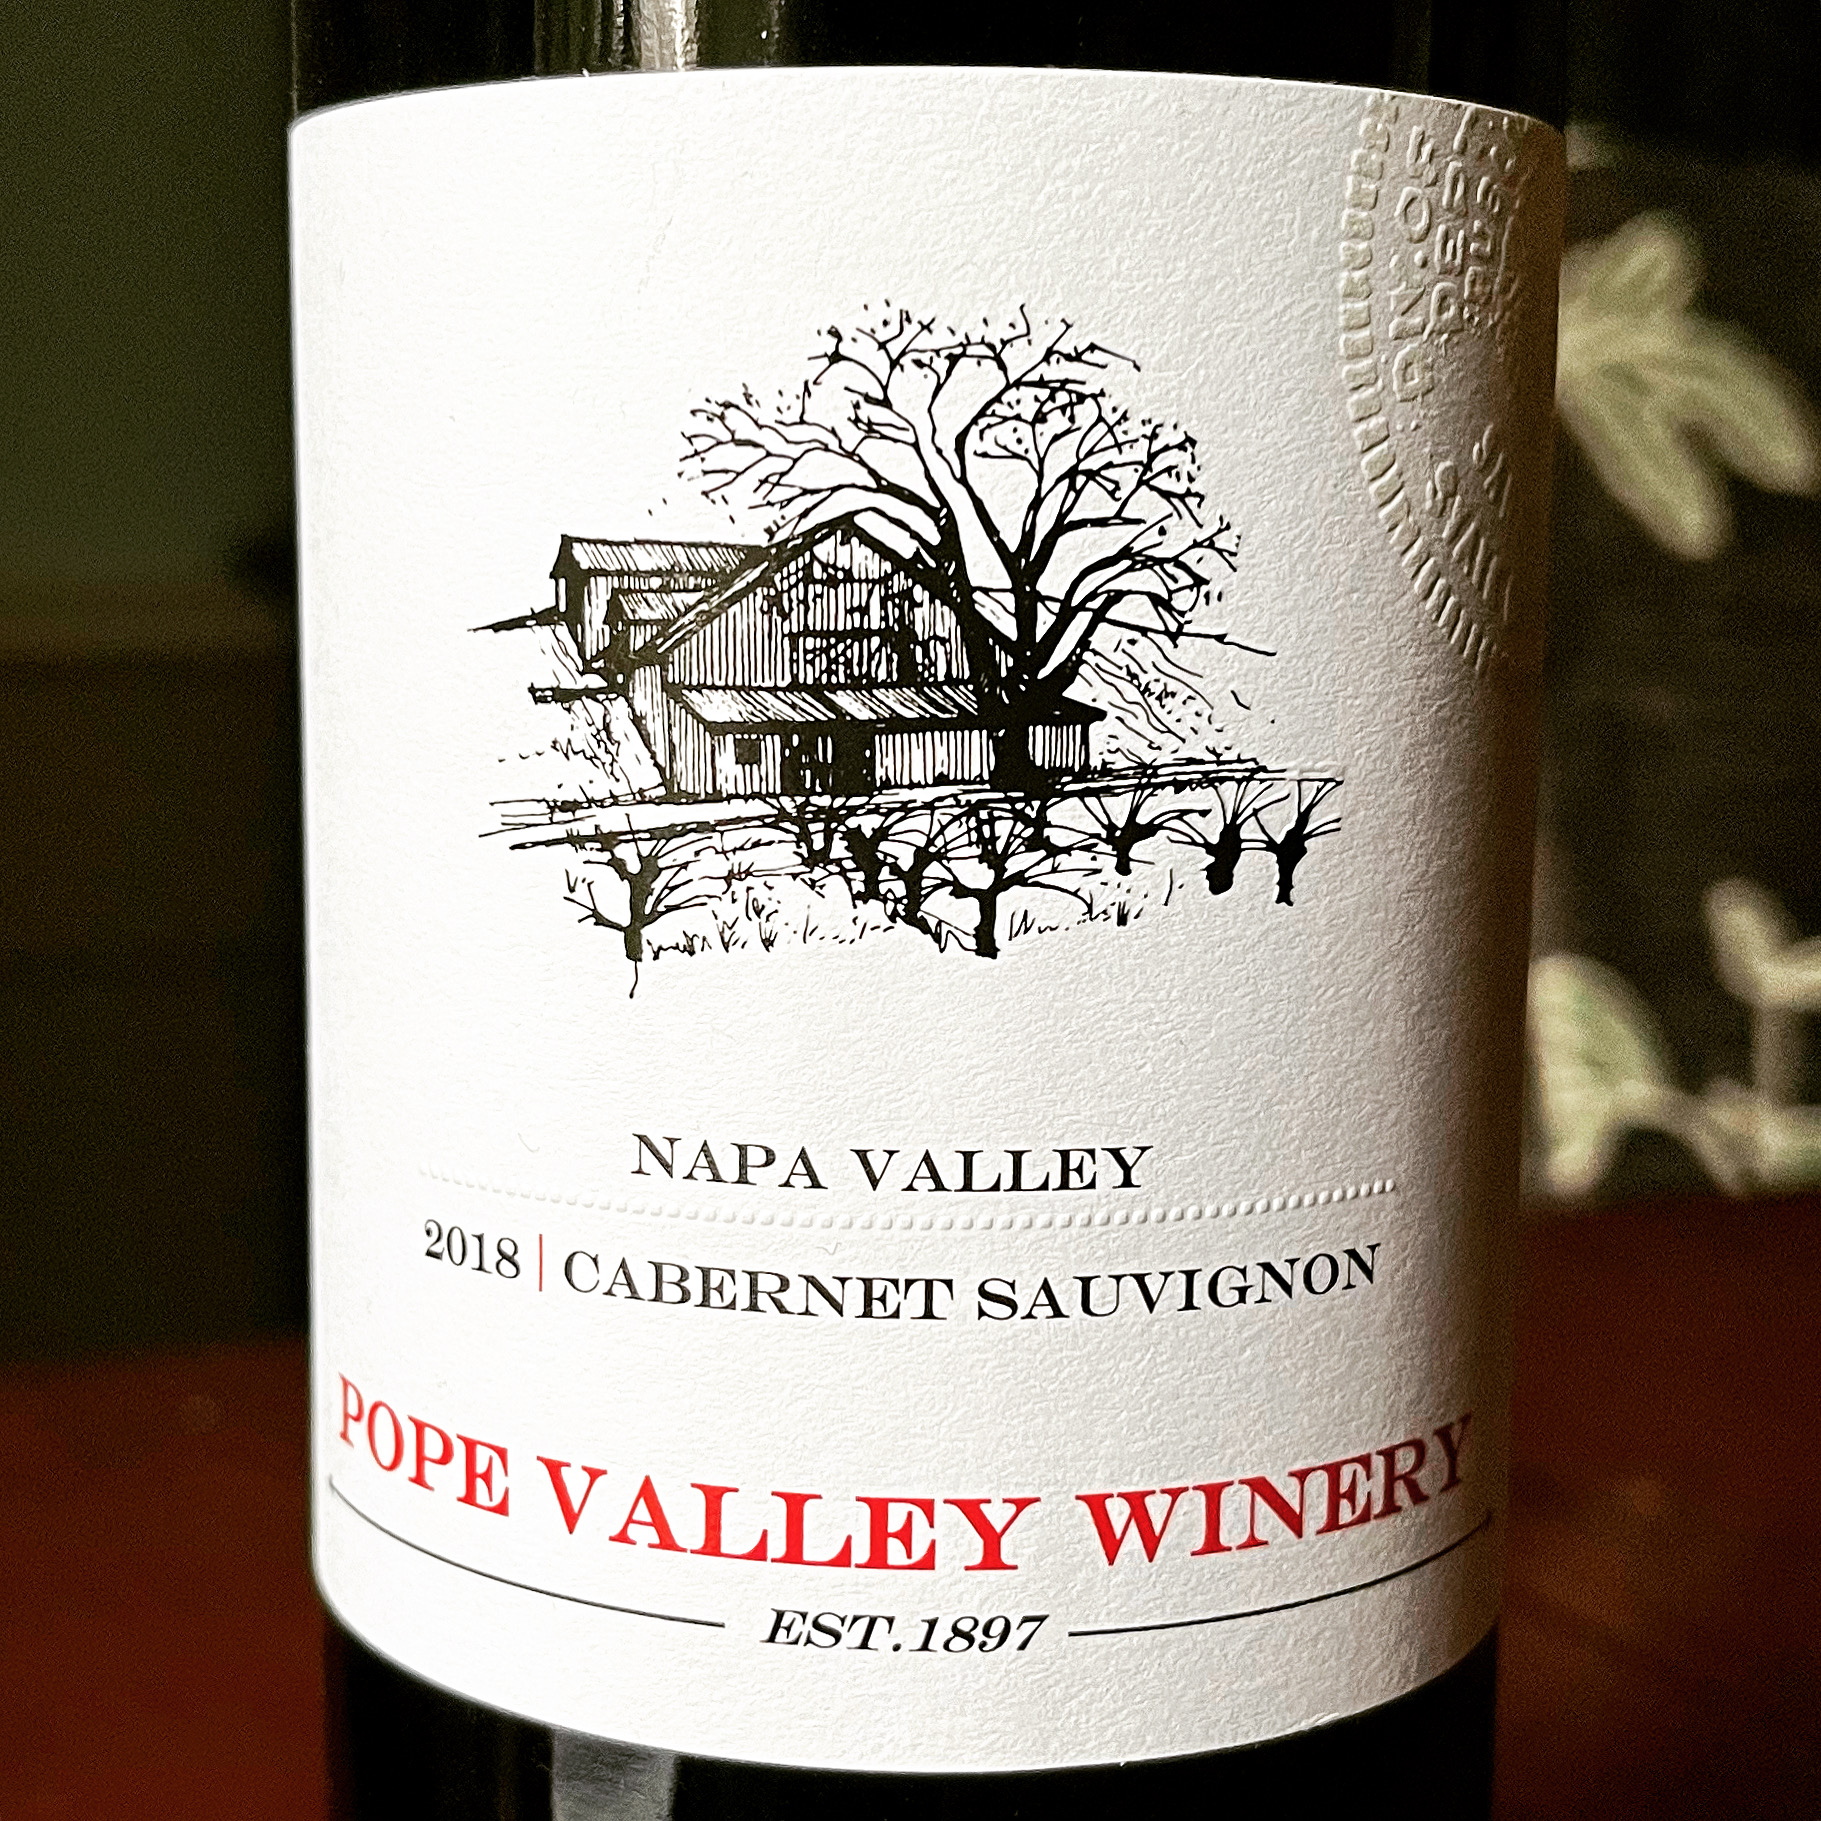 Pope Valley Winery Merlot Napa Valley 2018